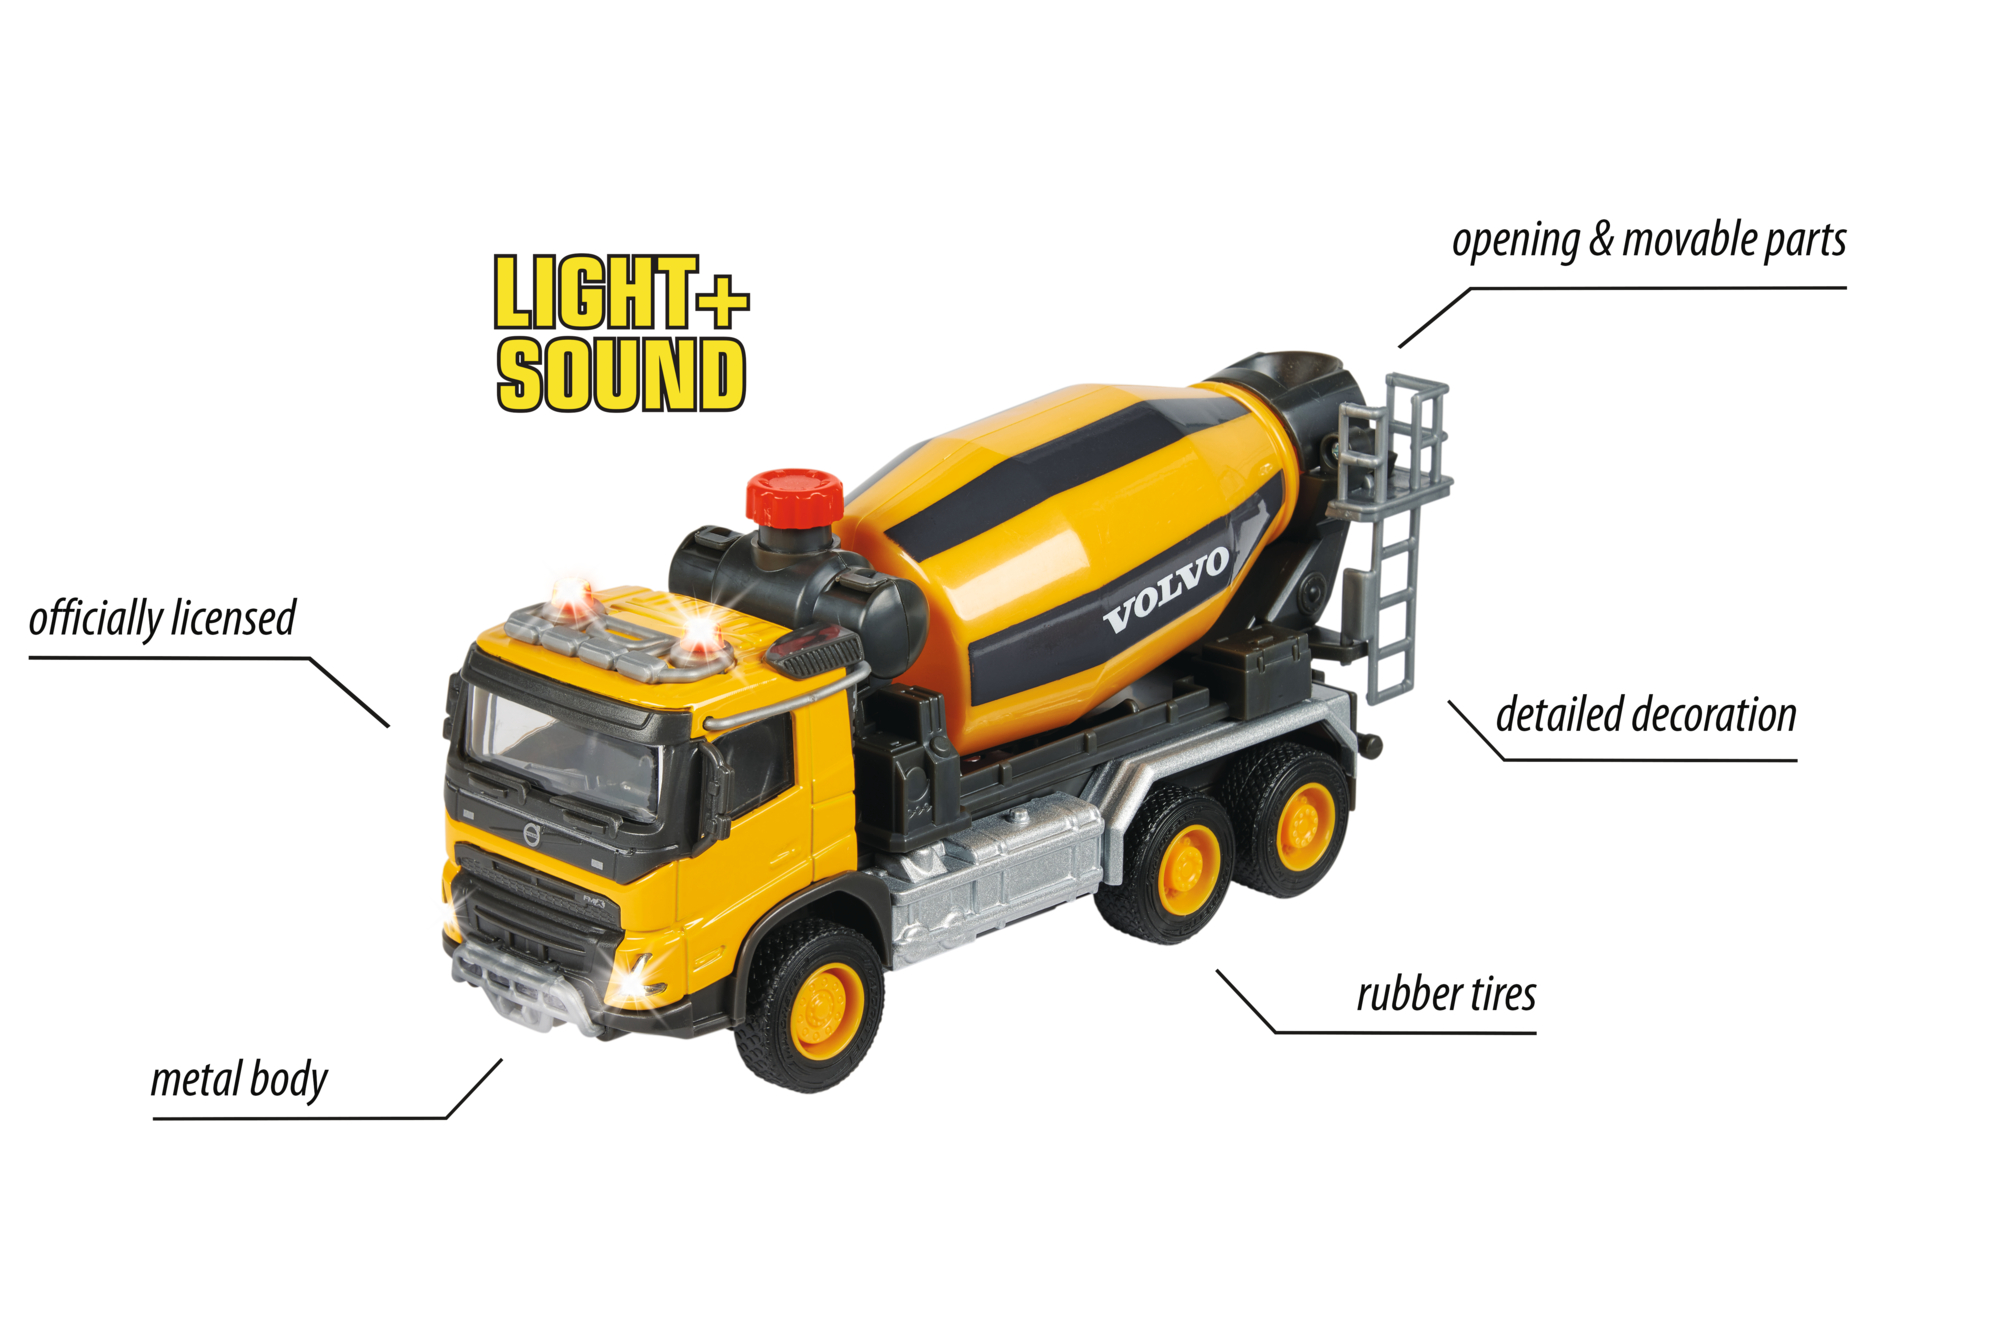 MAJORETTE Volvo Truck Cement Mixer Spielzeugauto Mehrfarbig